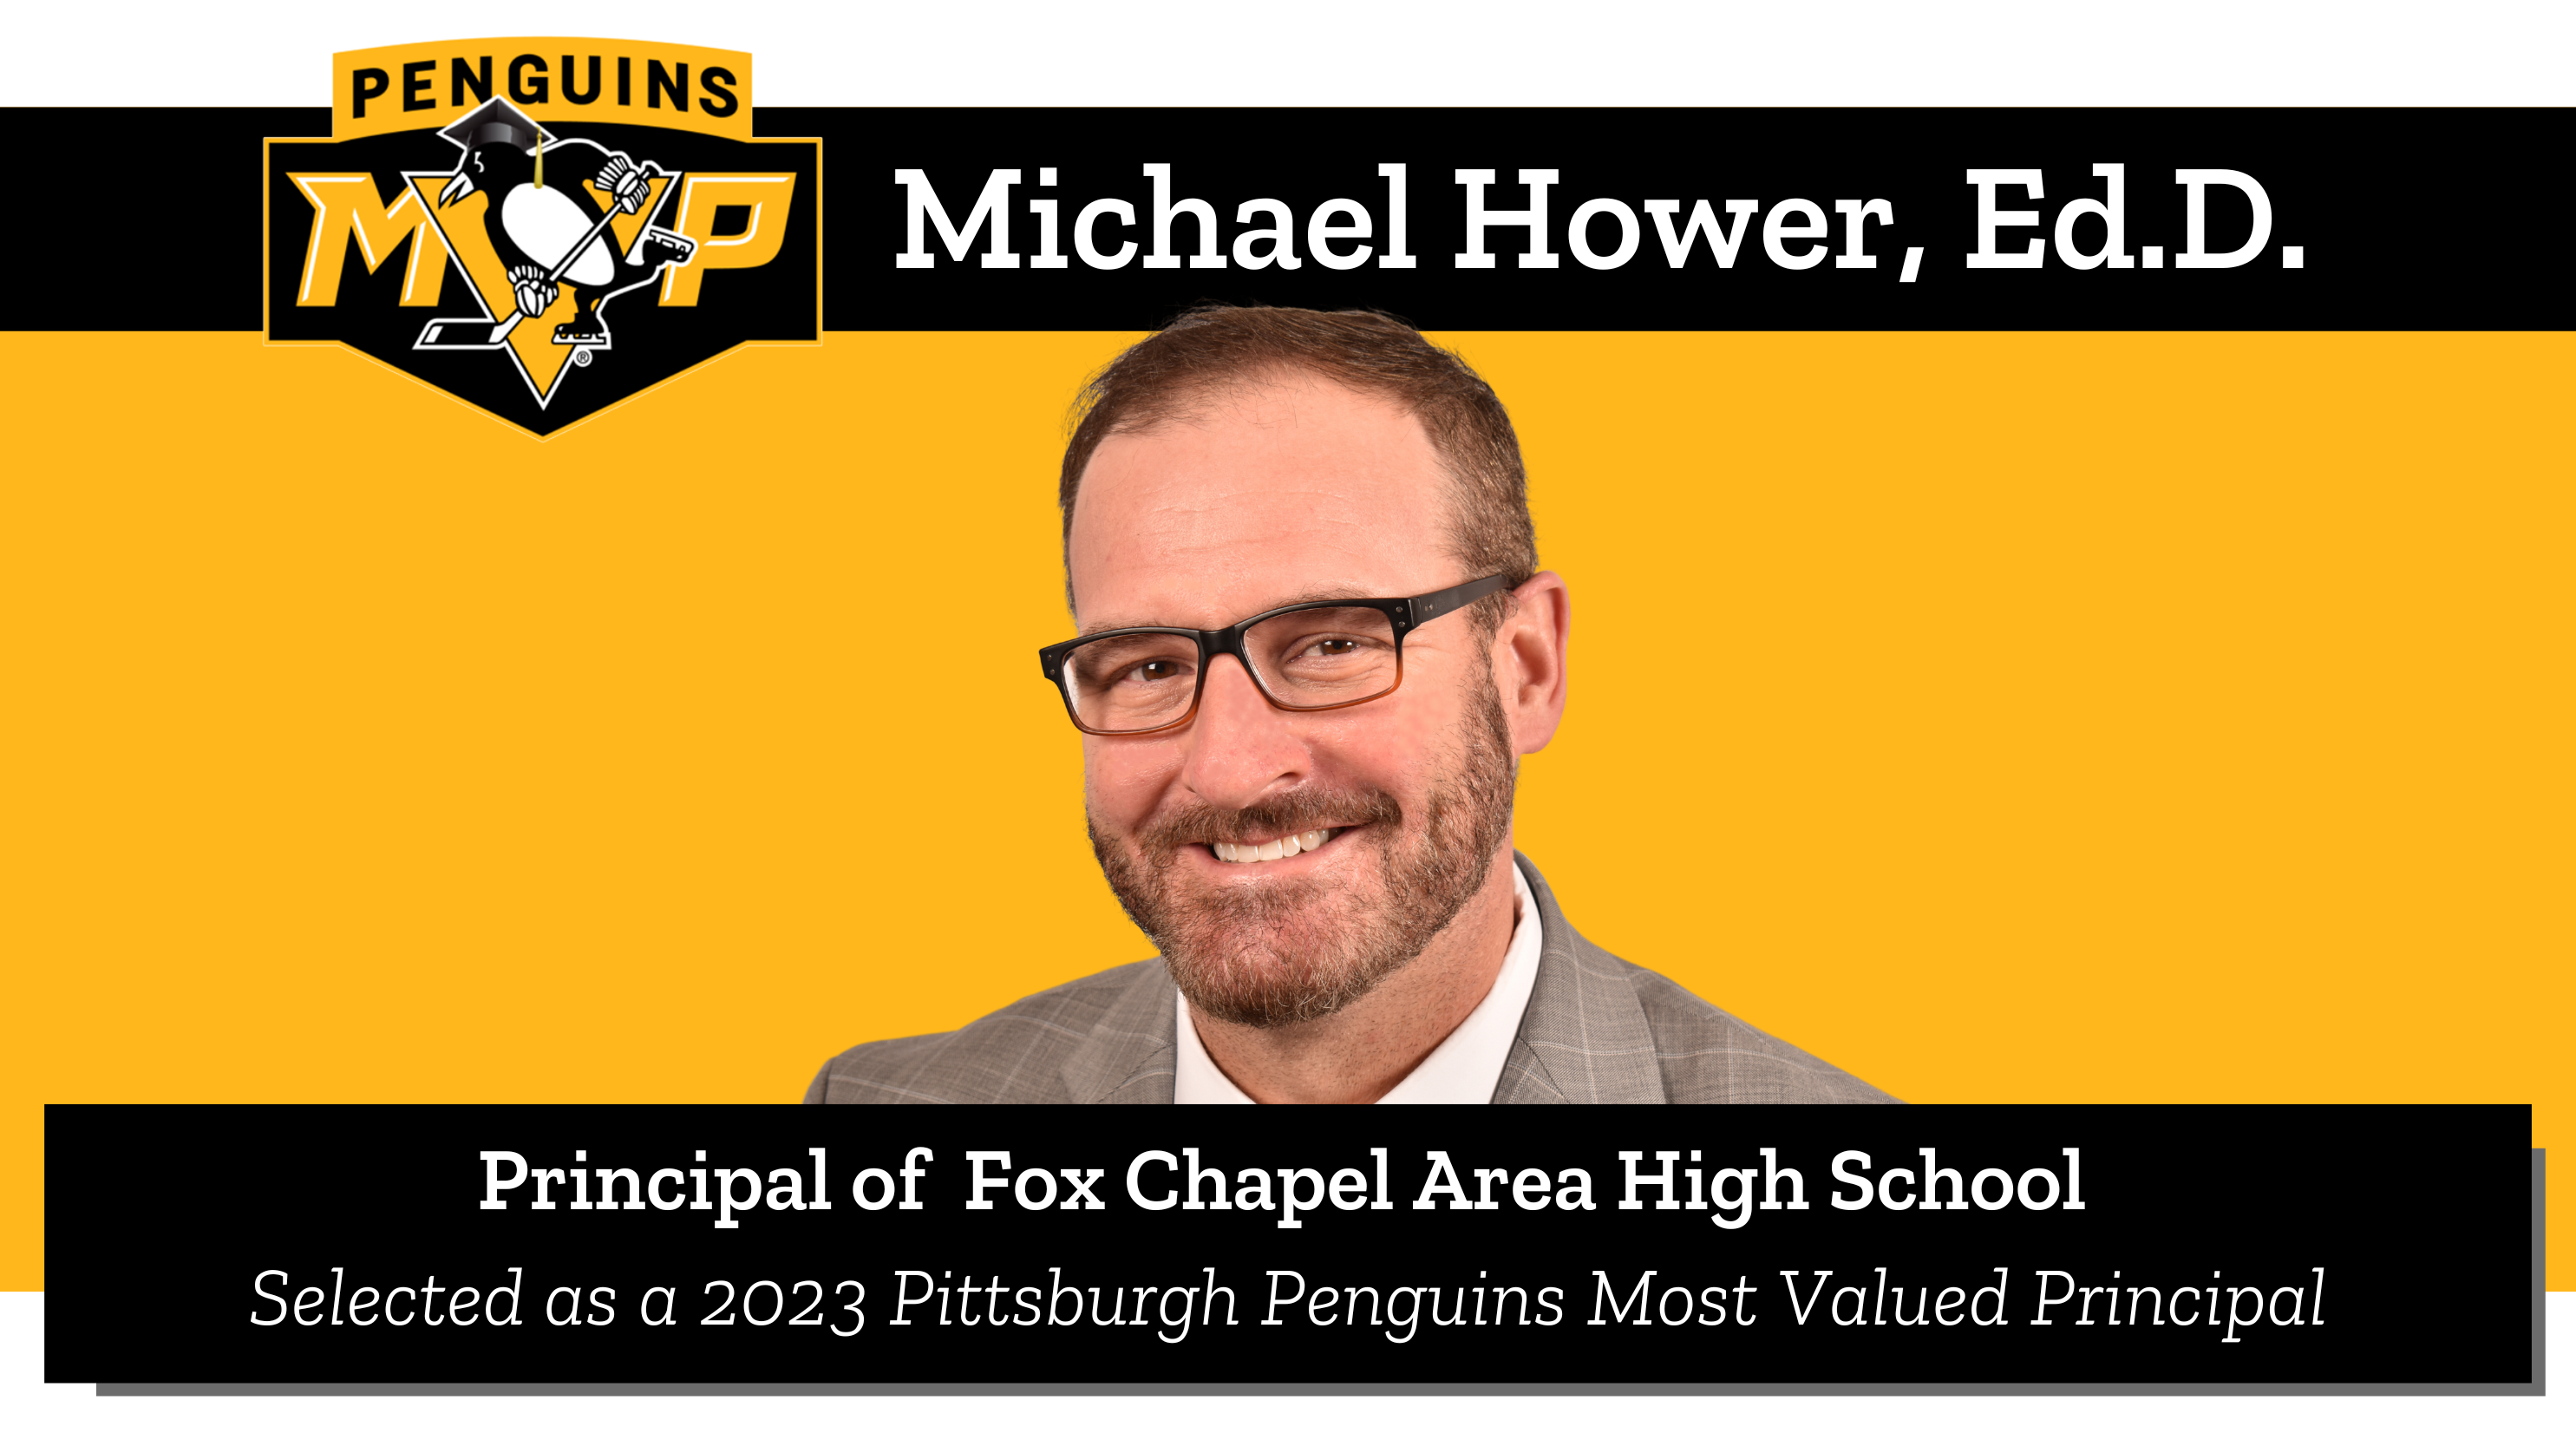 Pens MVP Michael Hower, Principal of Fox Chapel Area High School